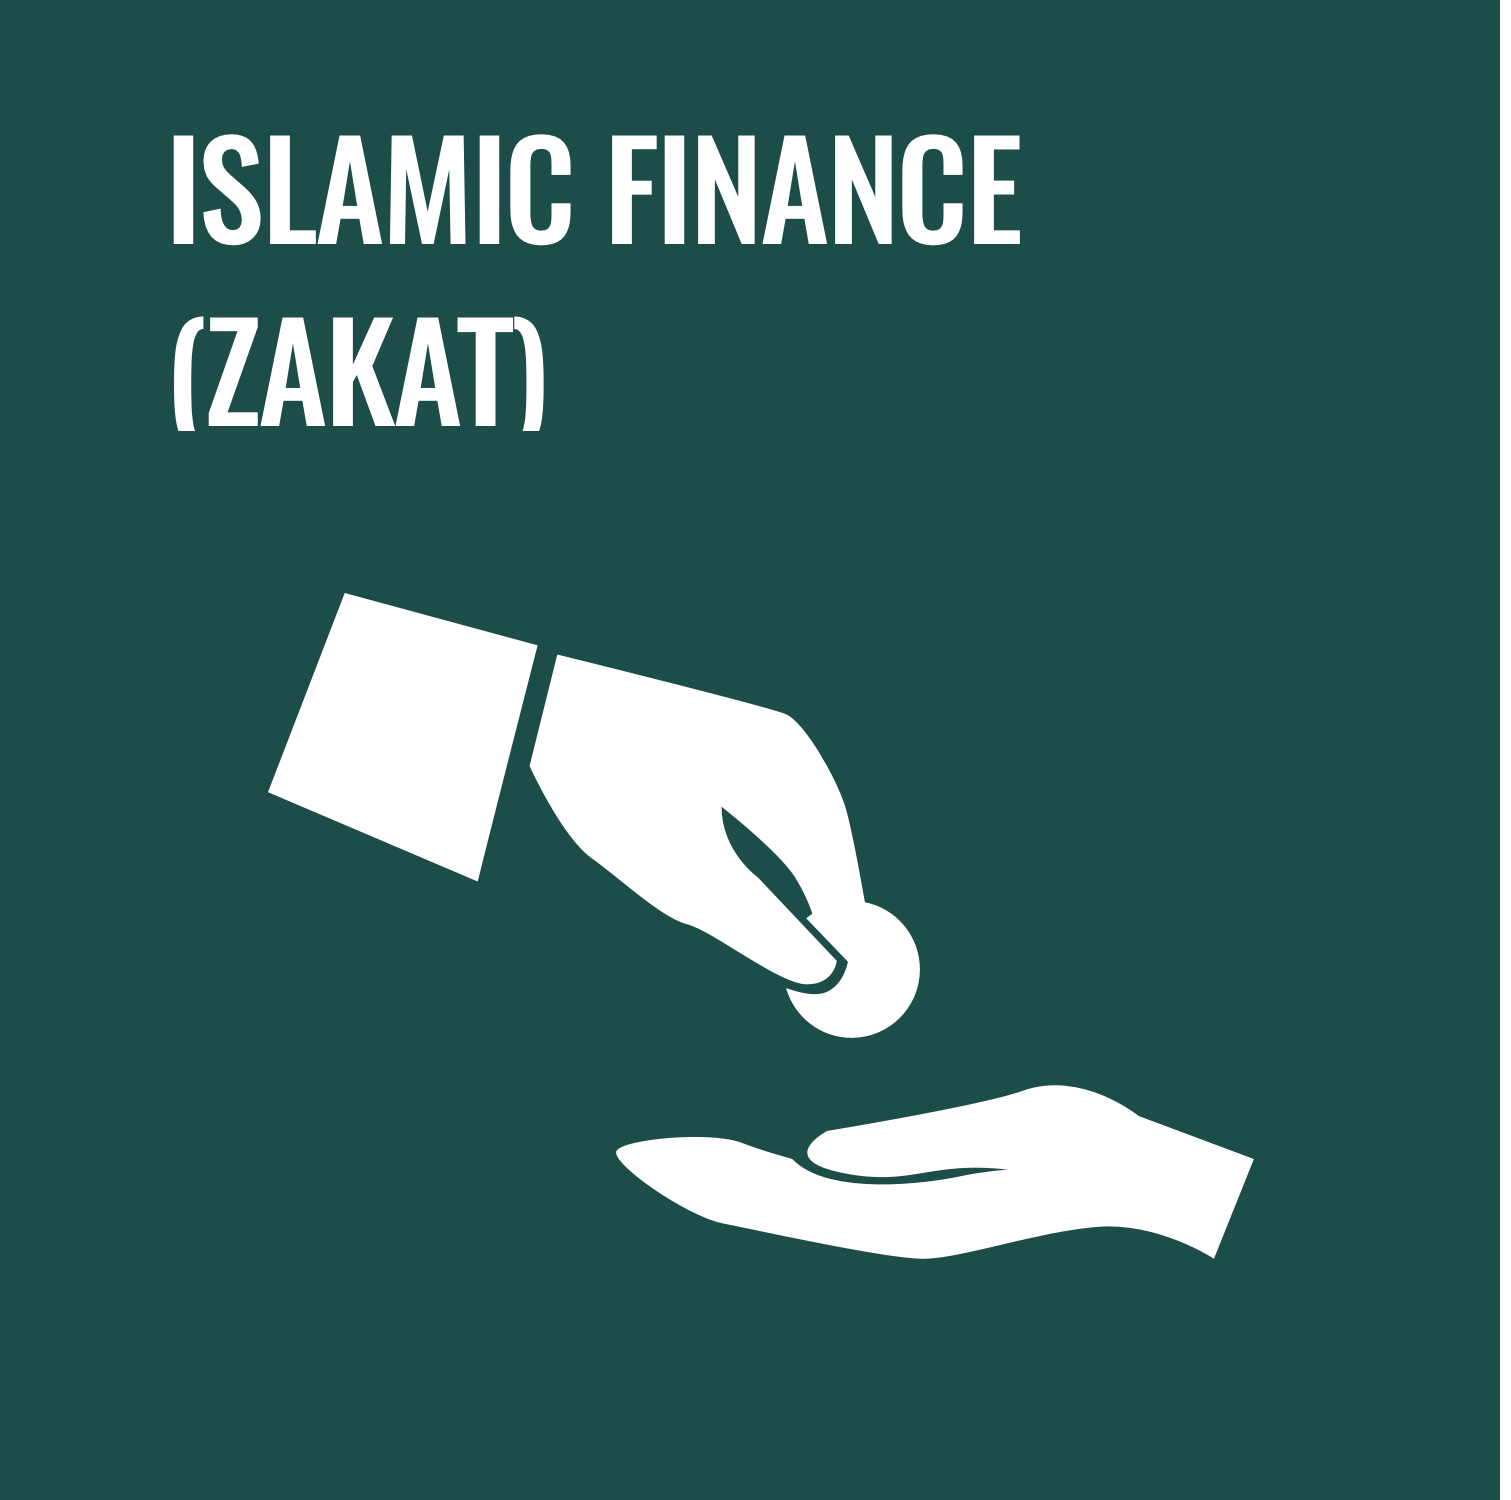 Islamic Finance (Zakat)